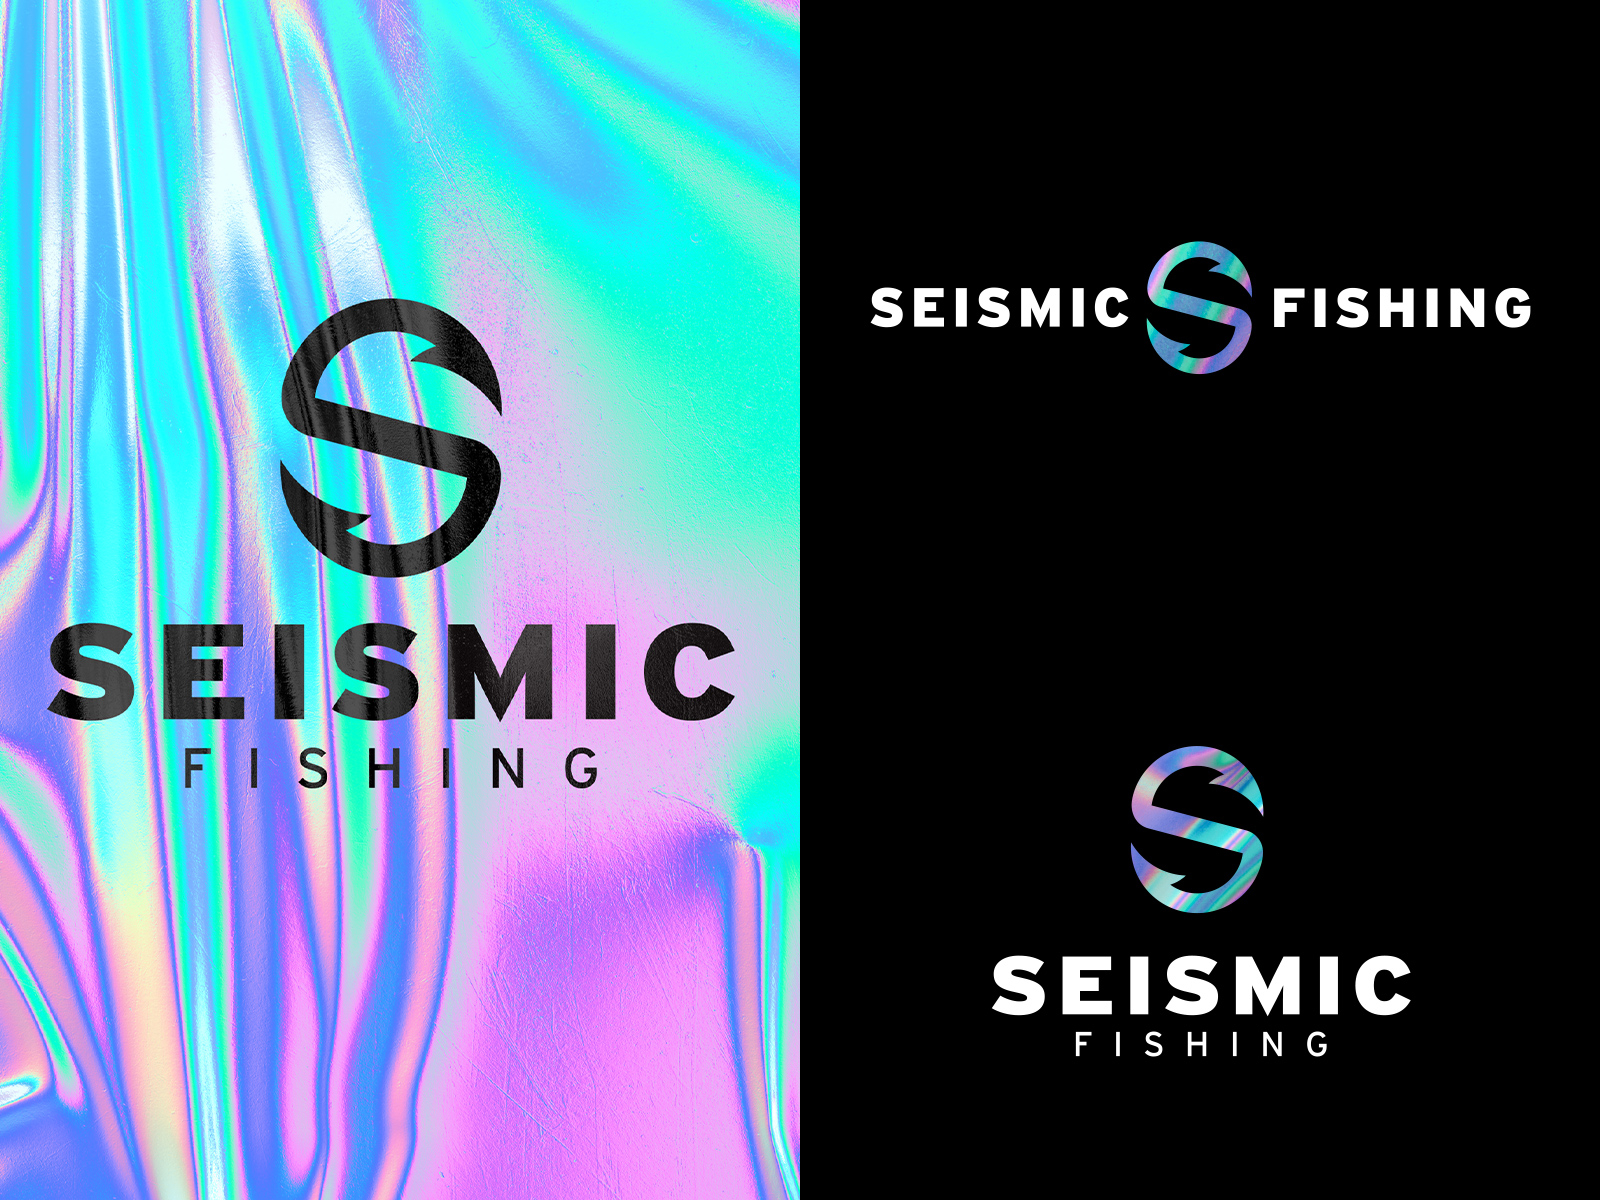 Seismic Fishing Logos by Kevan Gerdes on Dribbble